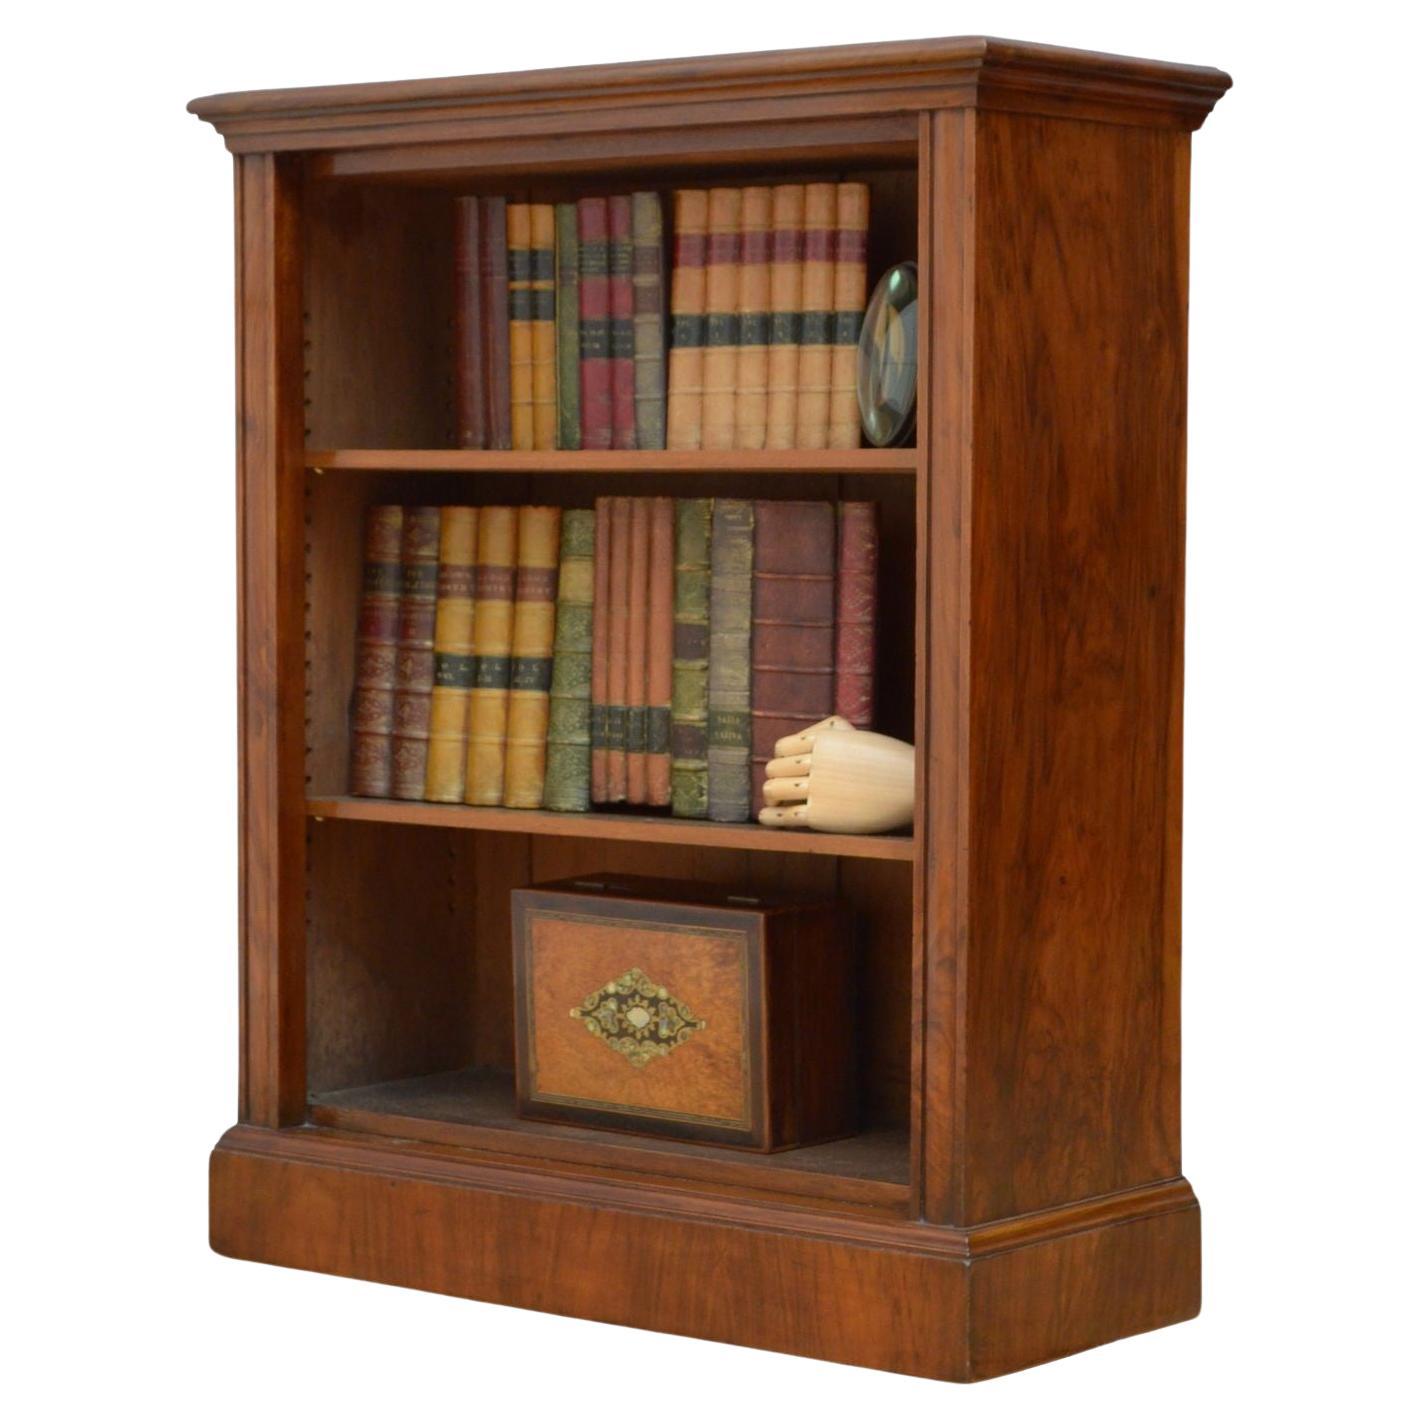 English Victorian Figured Walnut Open Bookcase